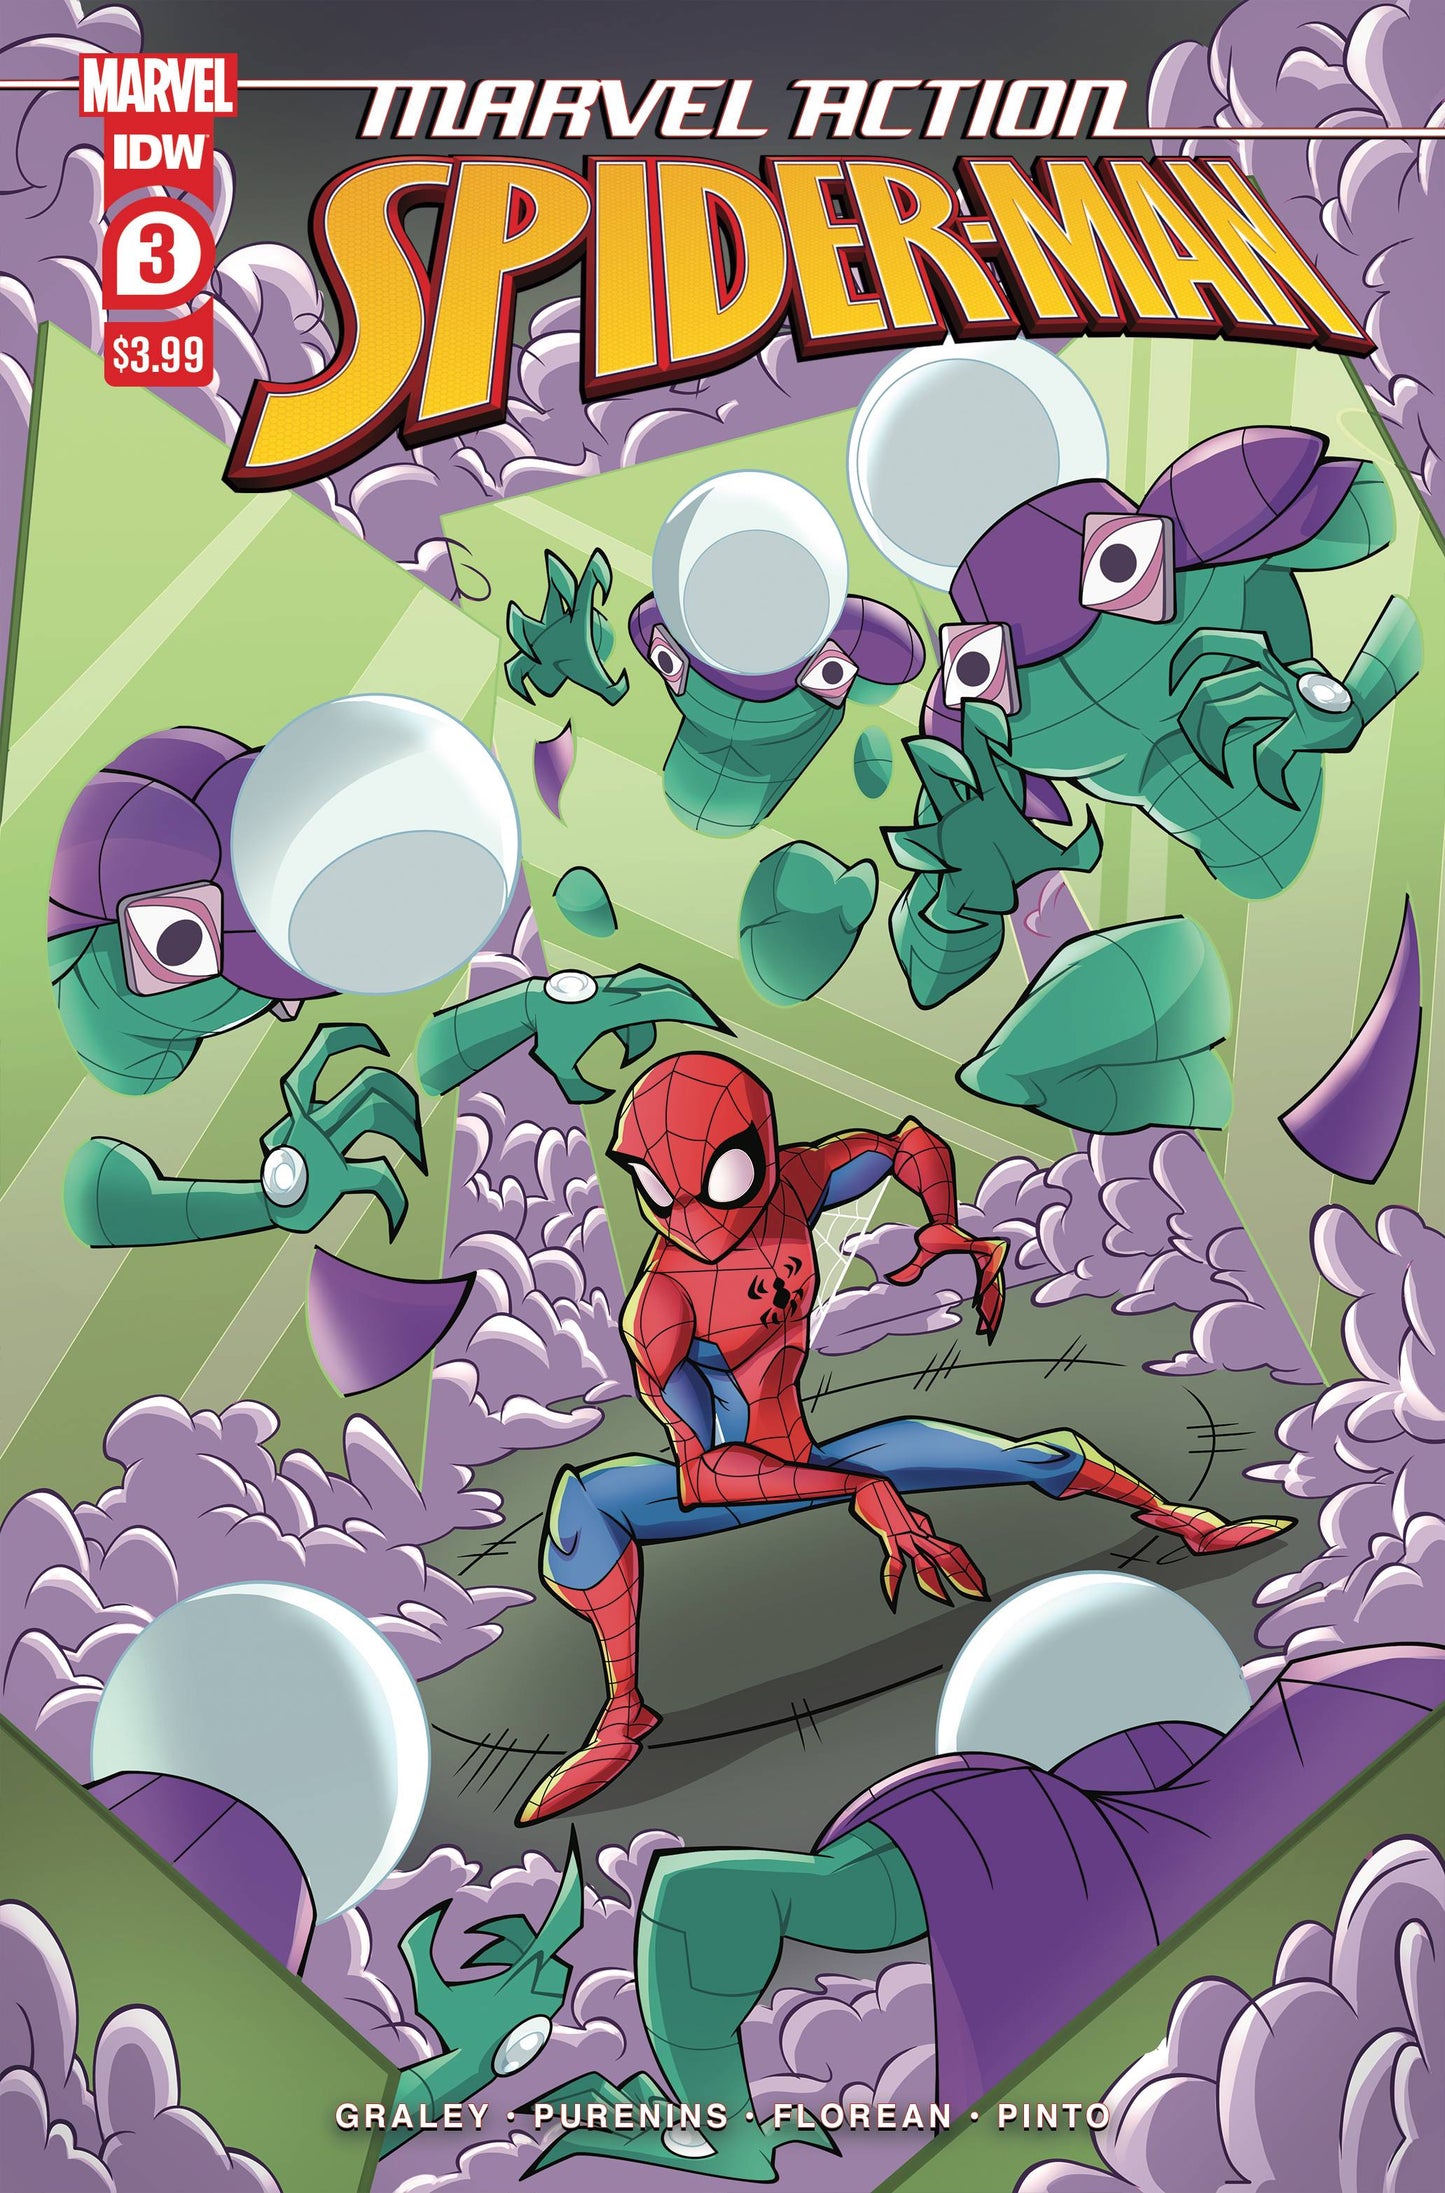 Marvel Action Spider-Man #3 (06/30/2021) IDW